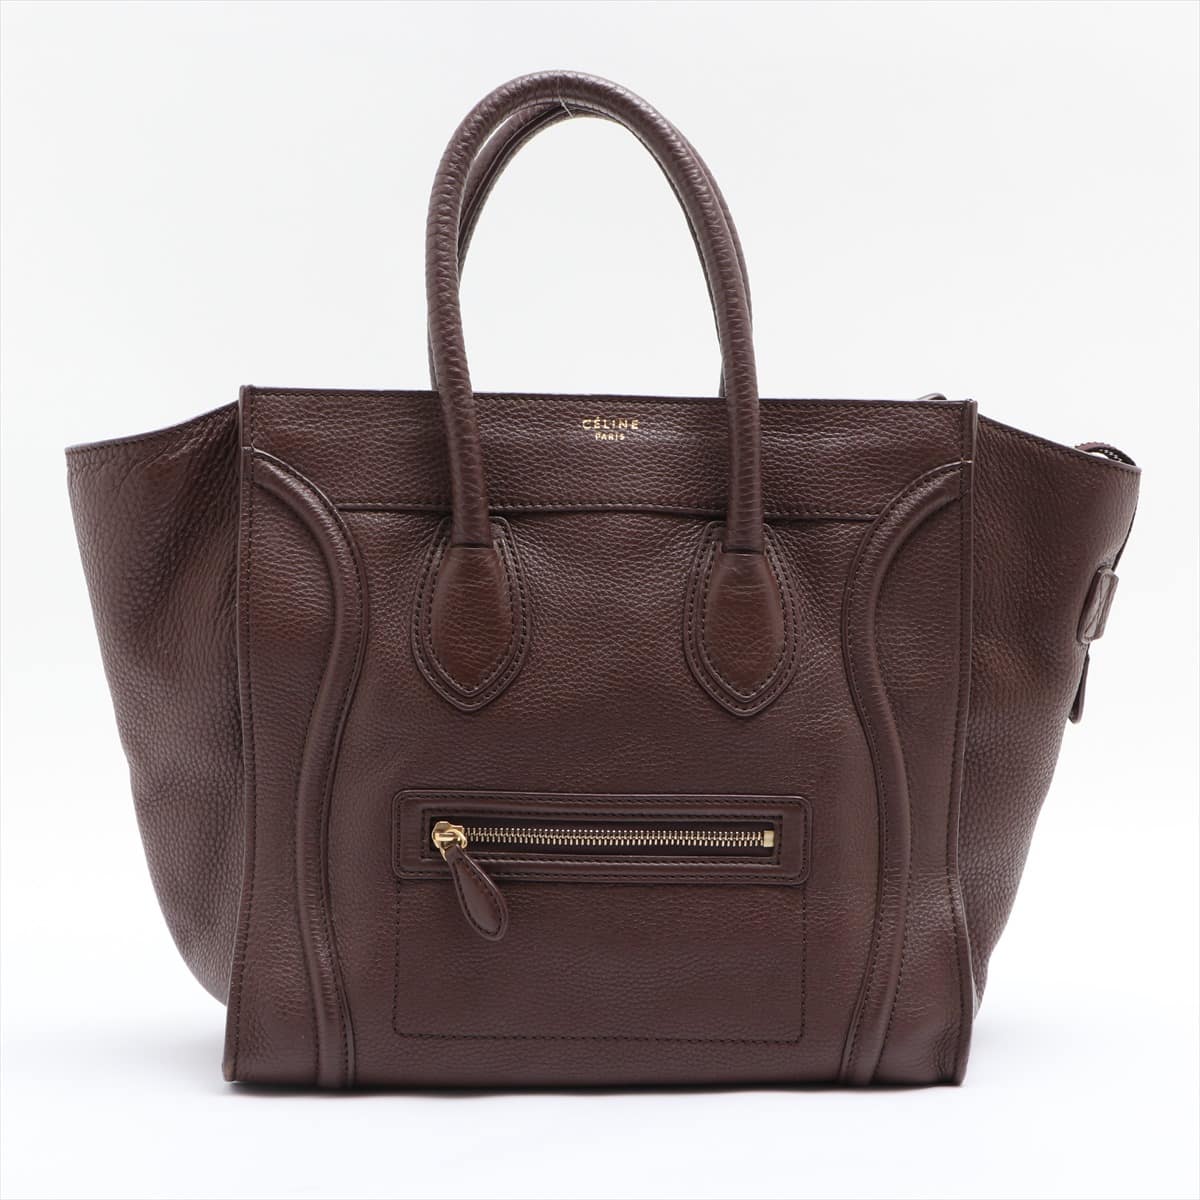 CELINE Luggage Mini shopper Leather Hand bag Brown